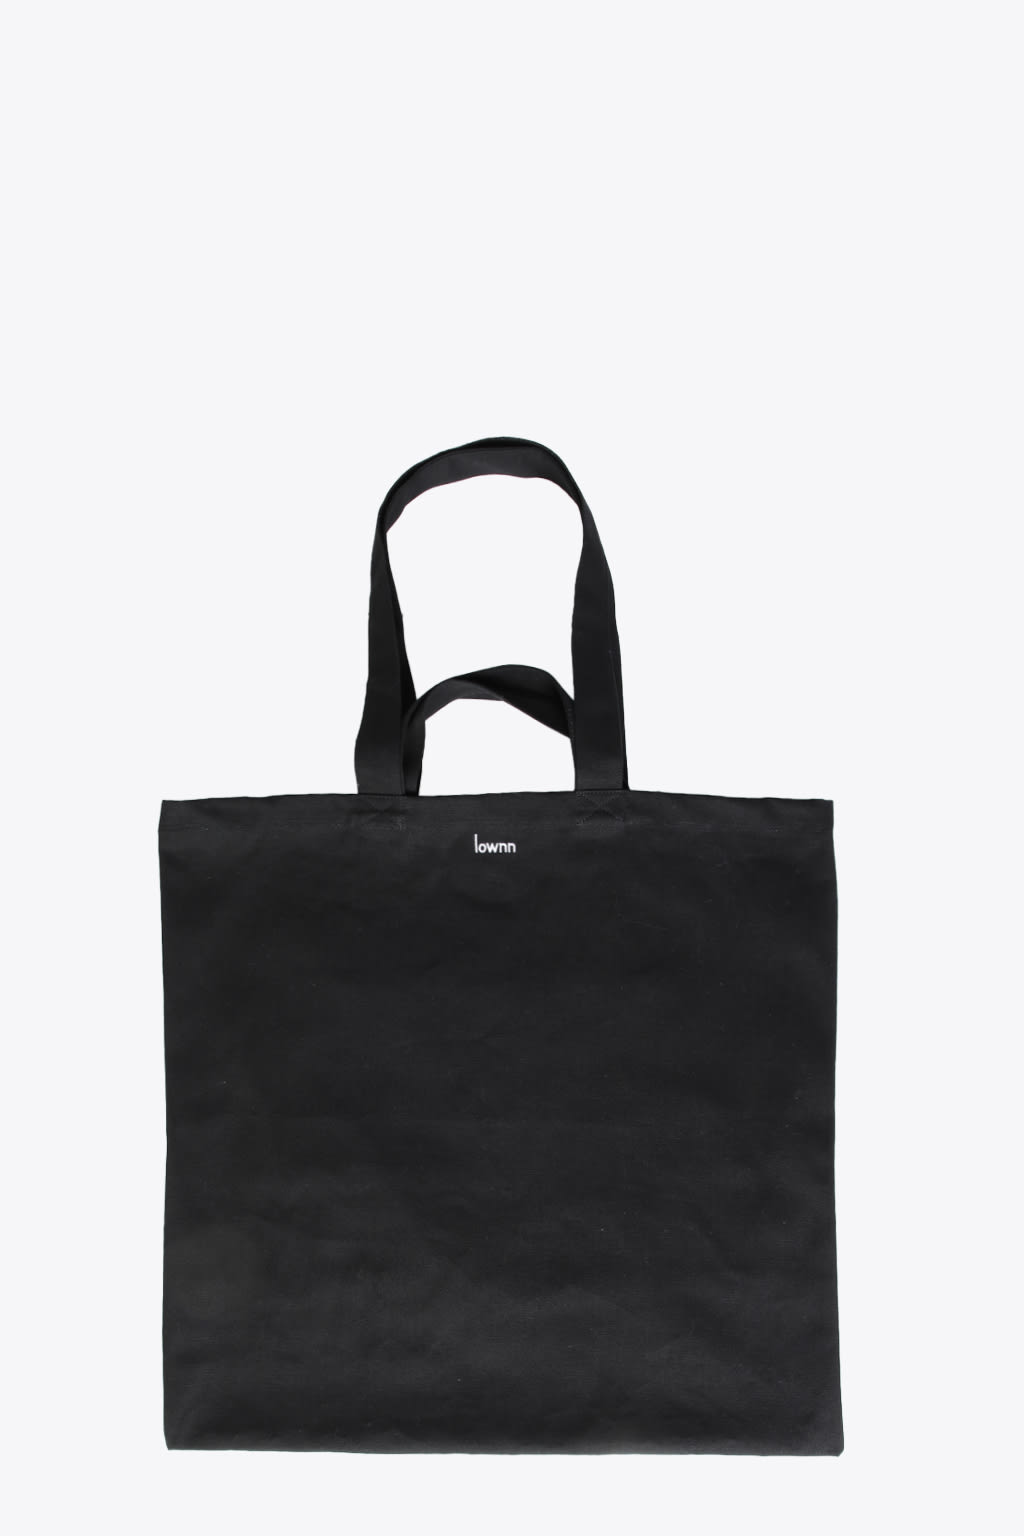 lownn Bag Black canvas tote bag